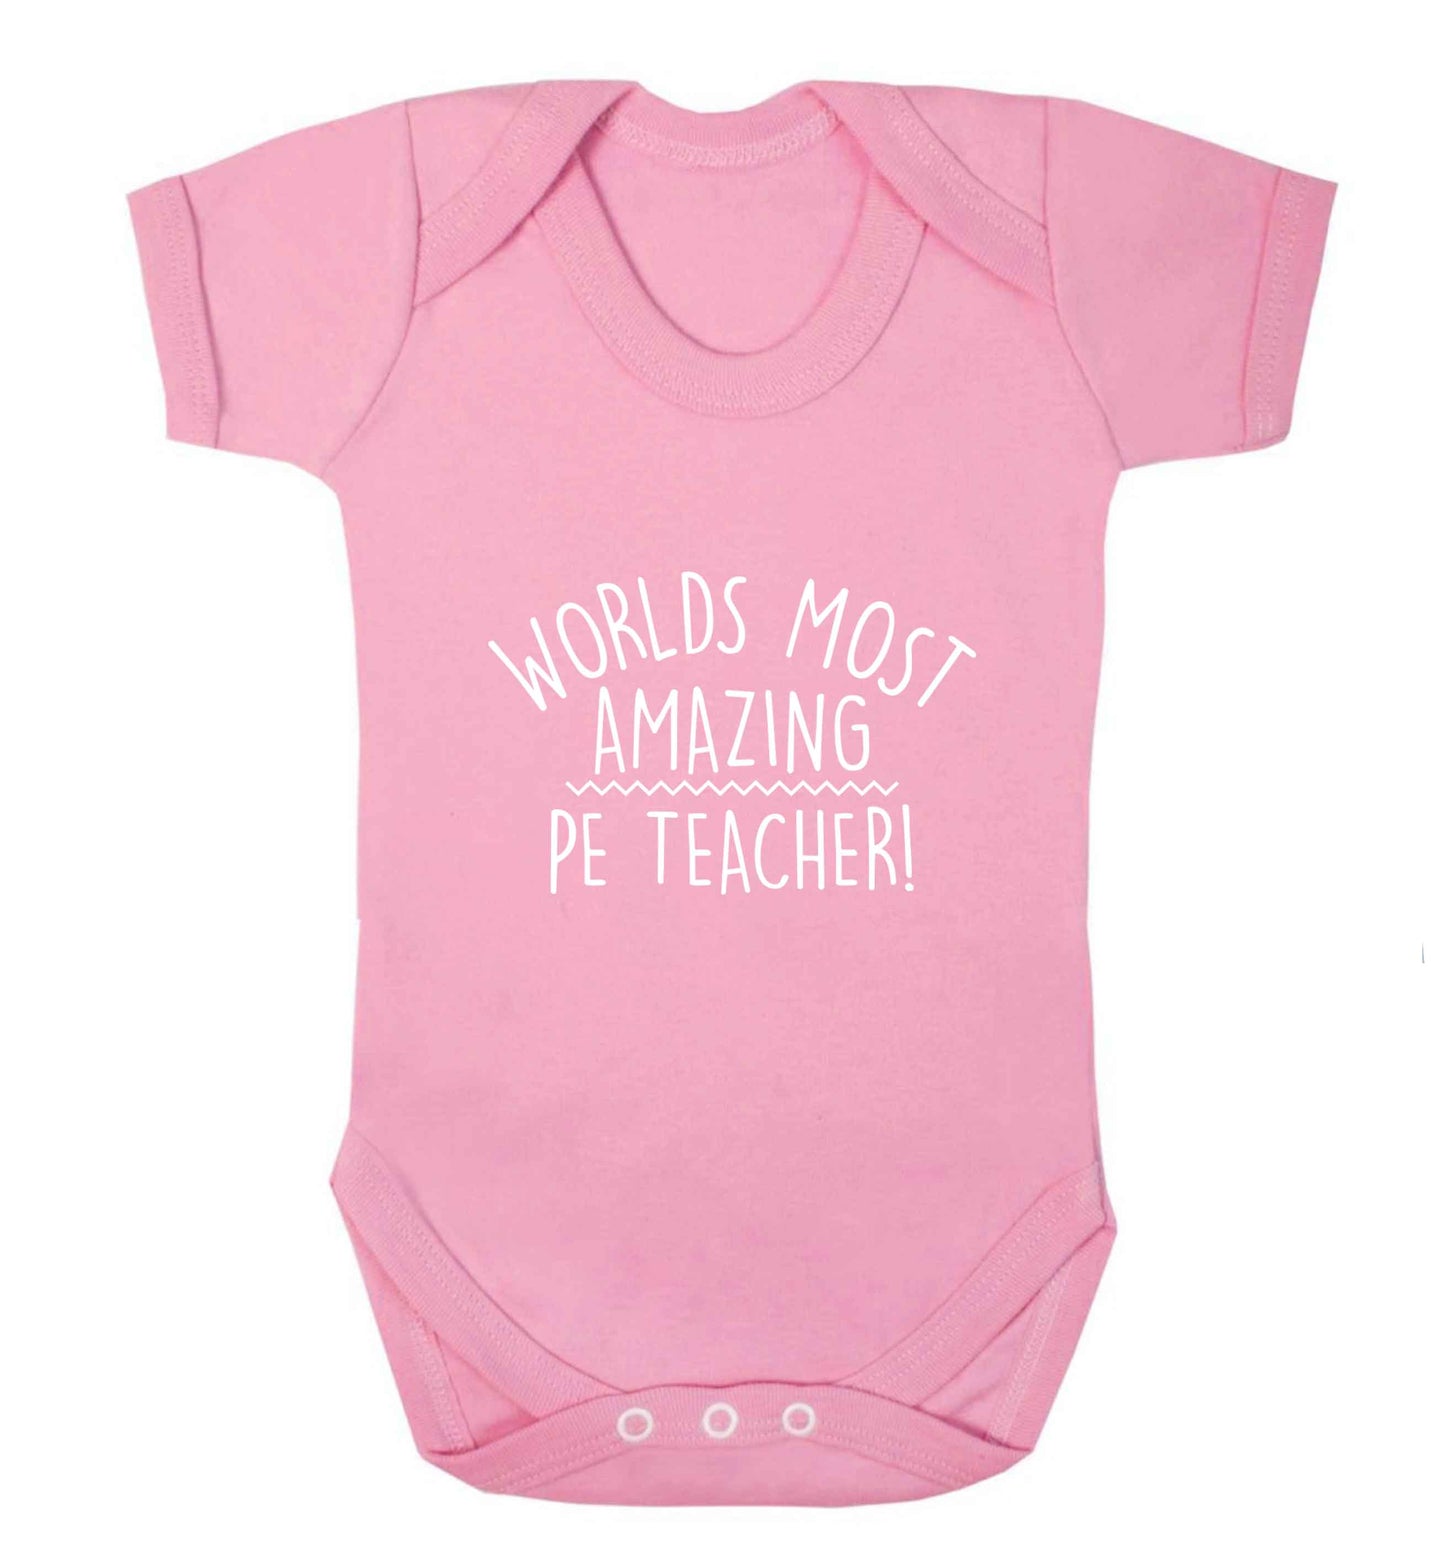 Worlds most amazing PE teacher baby vest pale pink 18-24 months